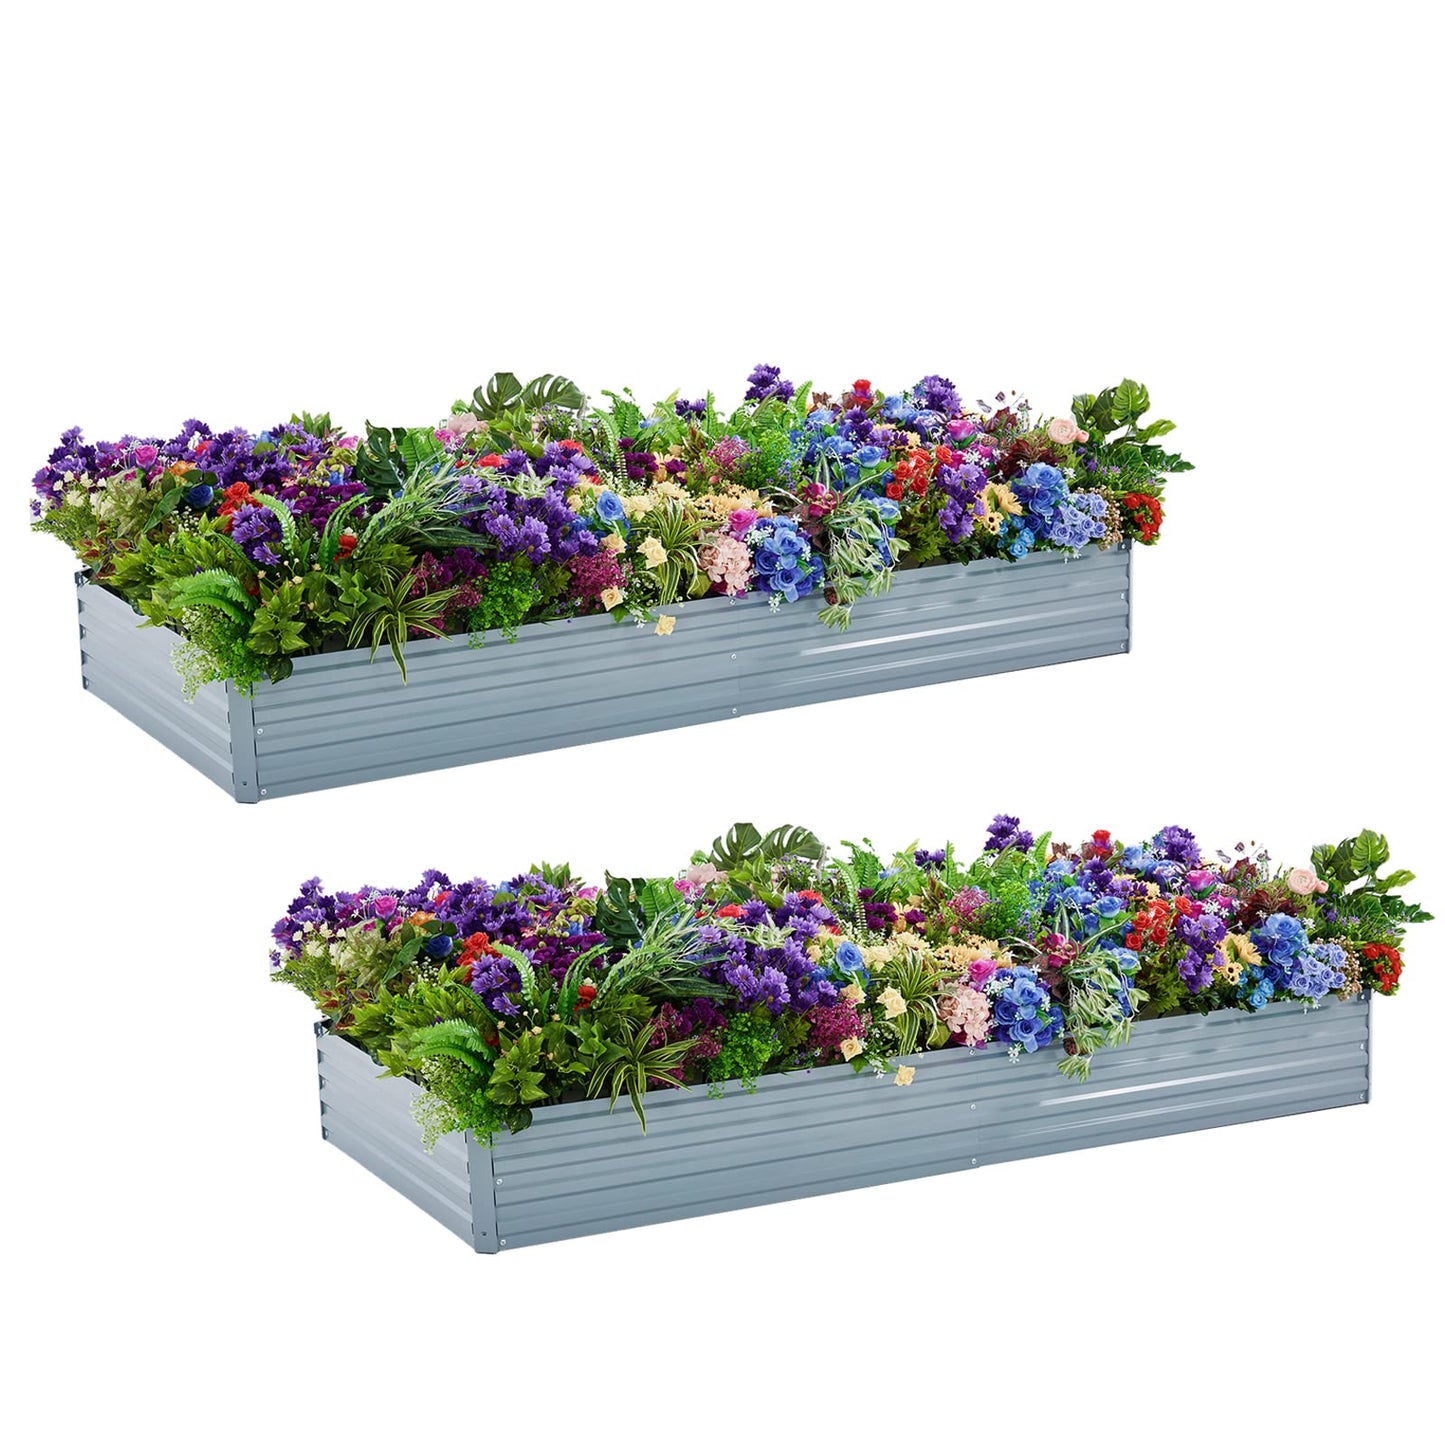 Meberam Metal Raised Garden Bed Kit 2PCS Set 6x3x1ft Outdoor Bottomless Galvanized Elevated Plant Box for Vegetable Flower, Grey